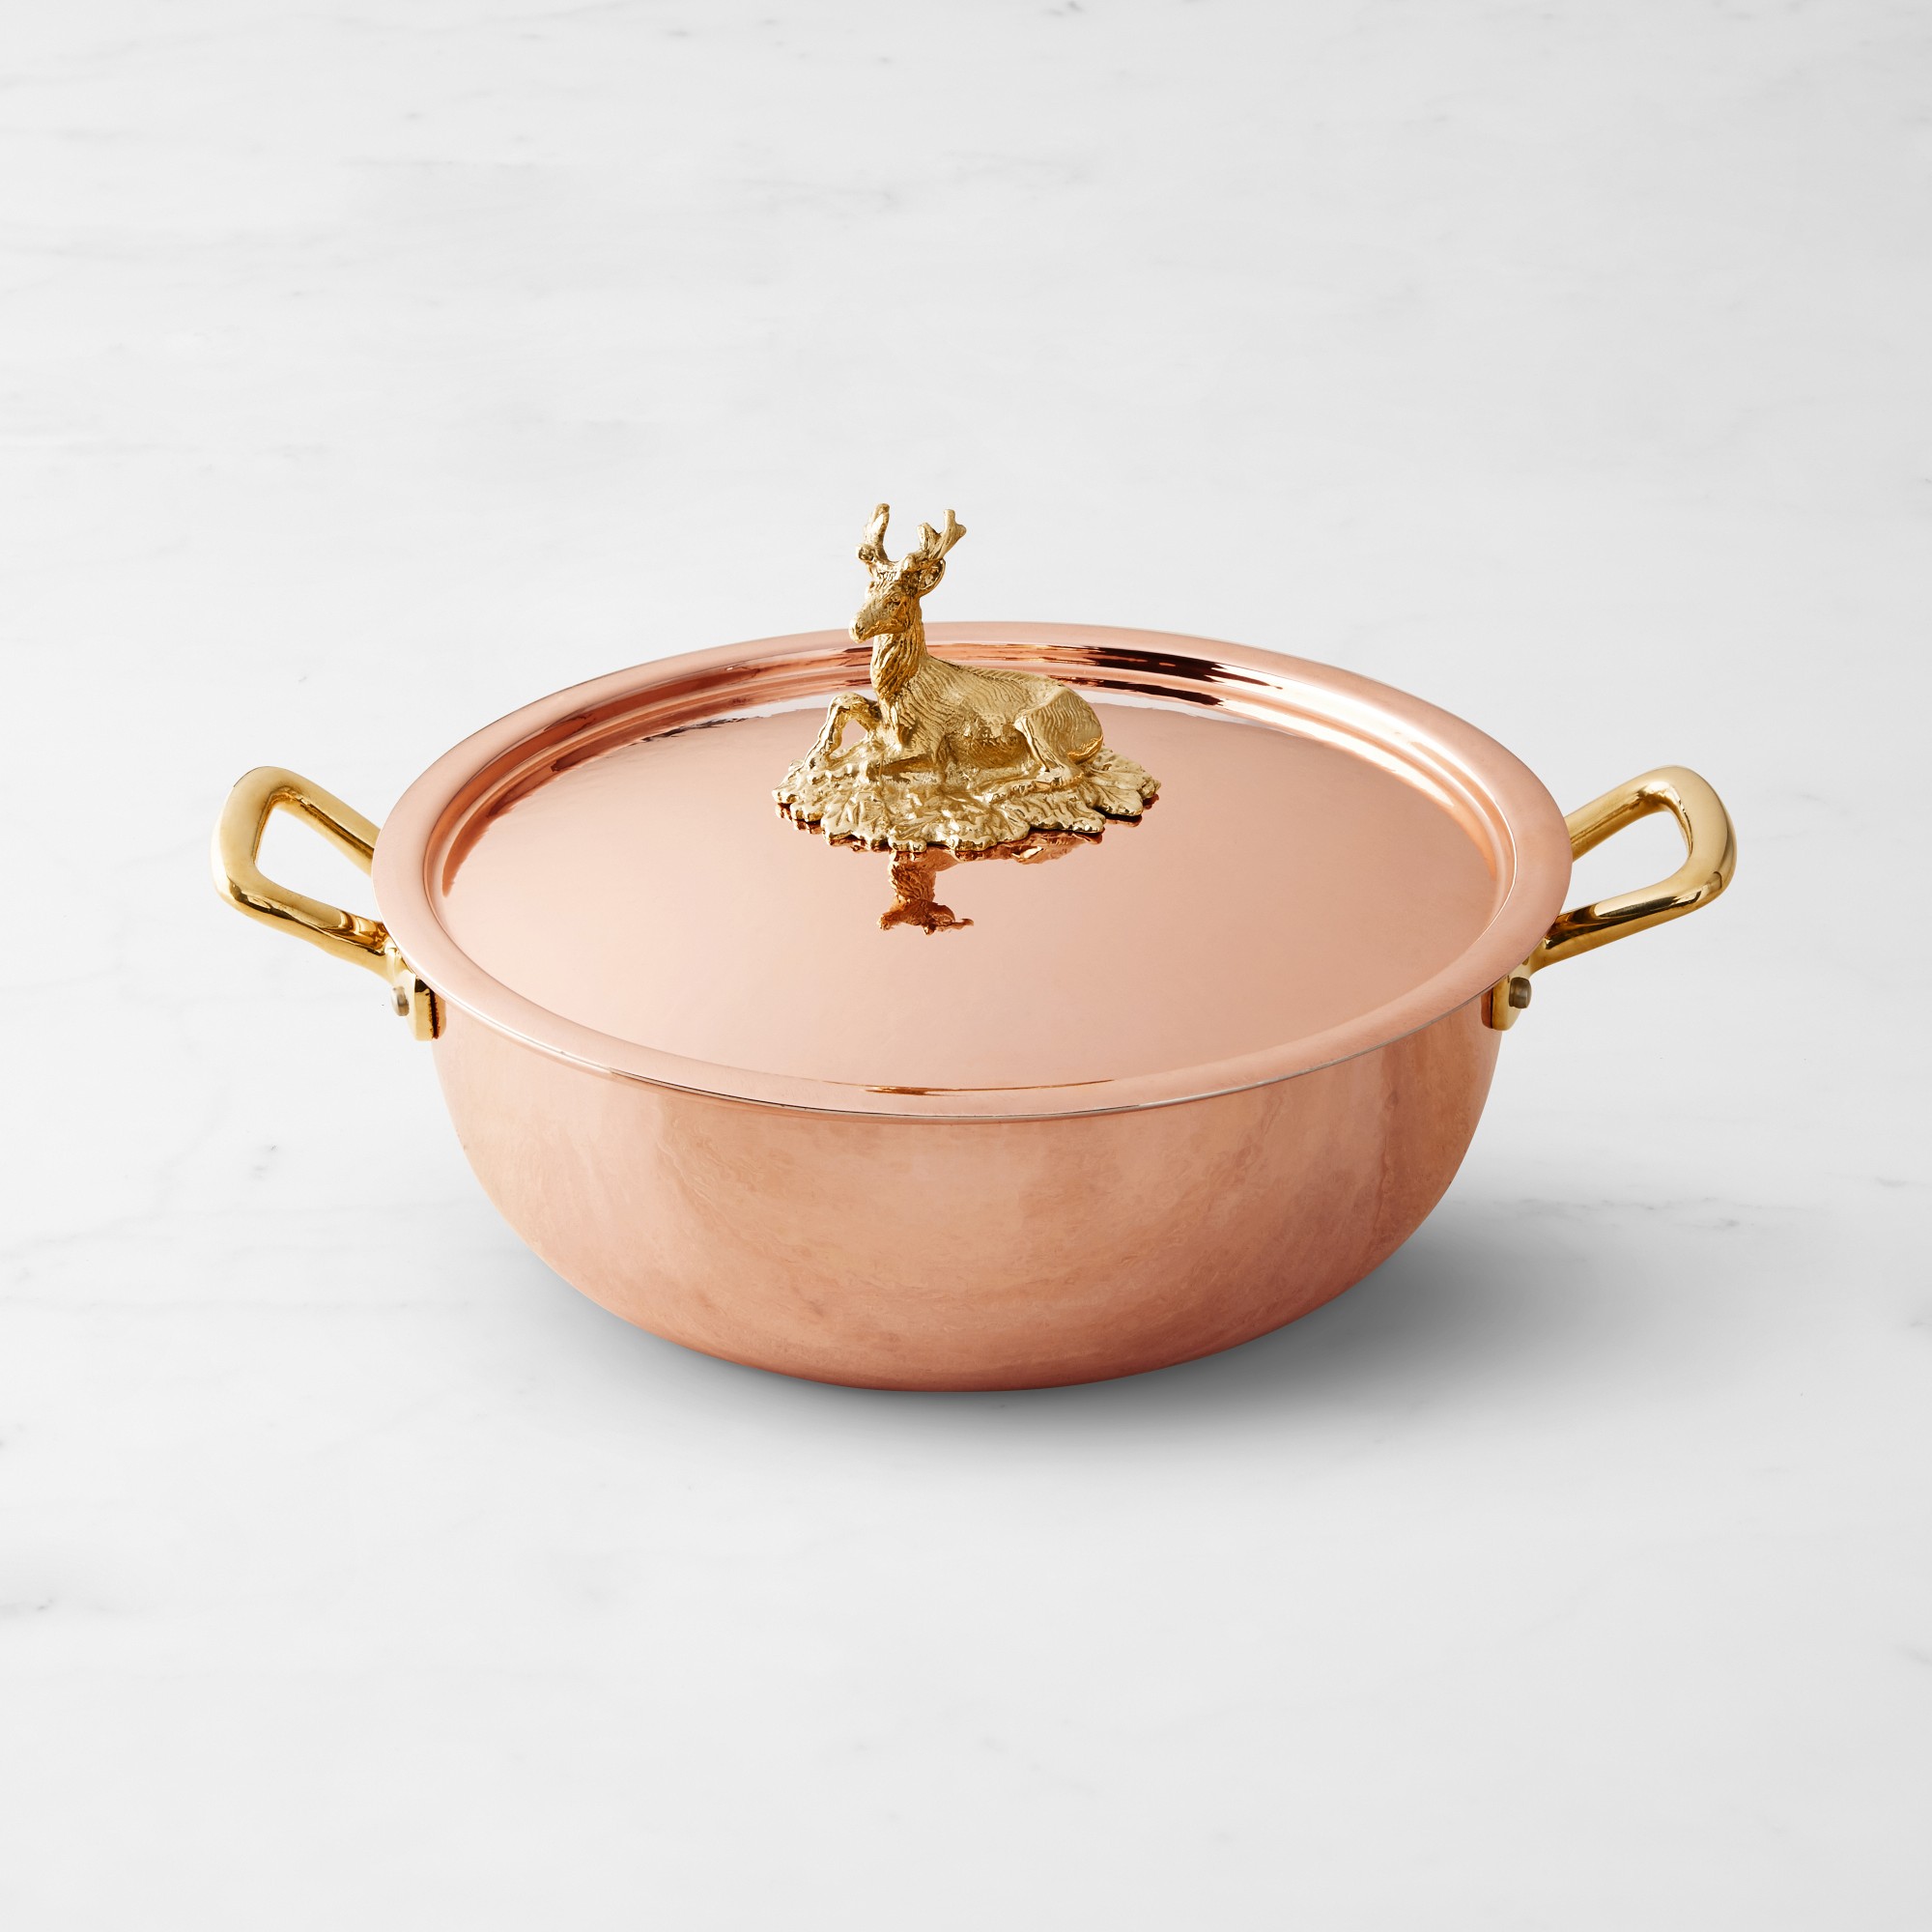 Ruffoni Historia Hammered Copper Chef Pot with Stag Knob, 4-Qt.